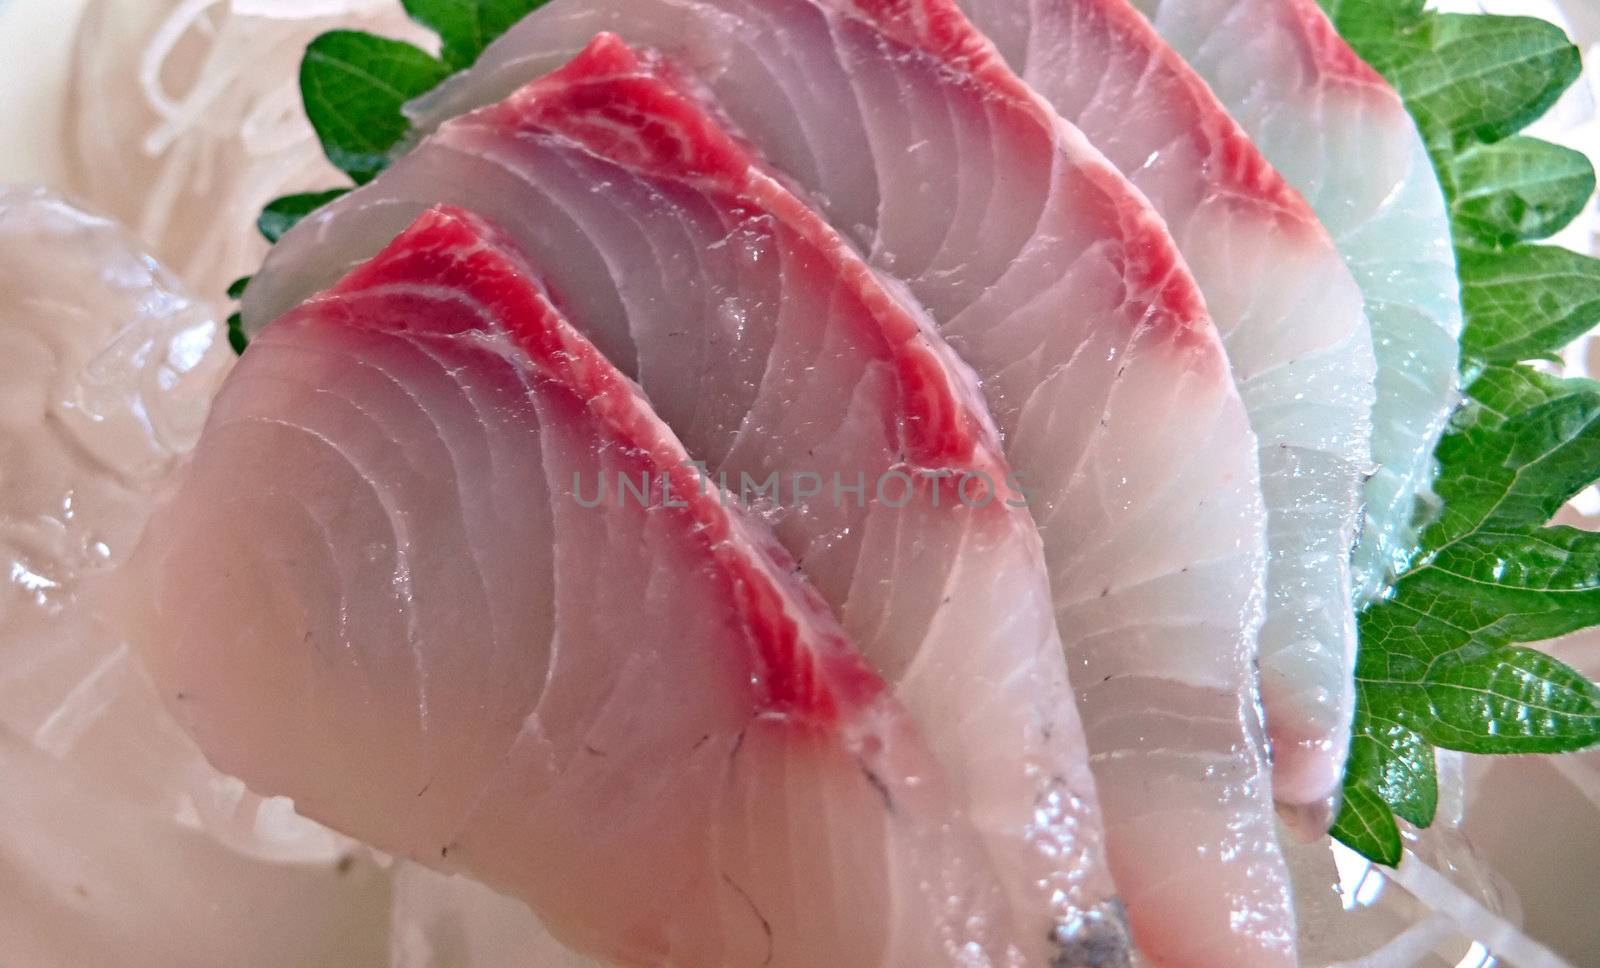 traditional japanese food, served raw fish cuts - sashimi